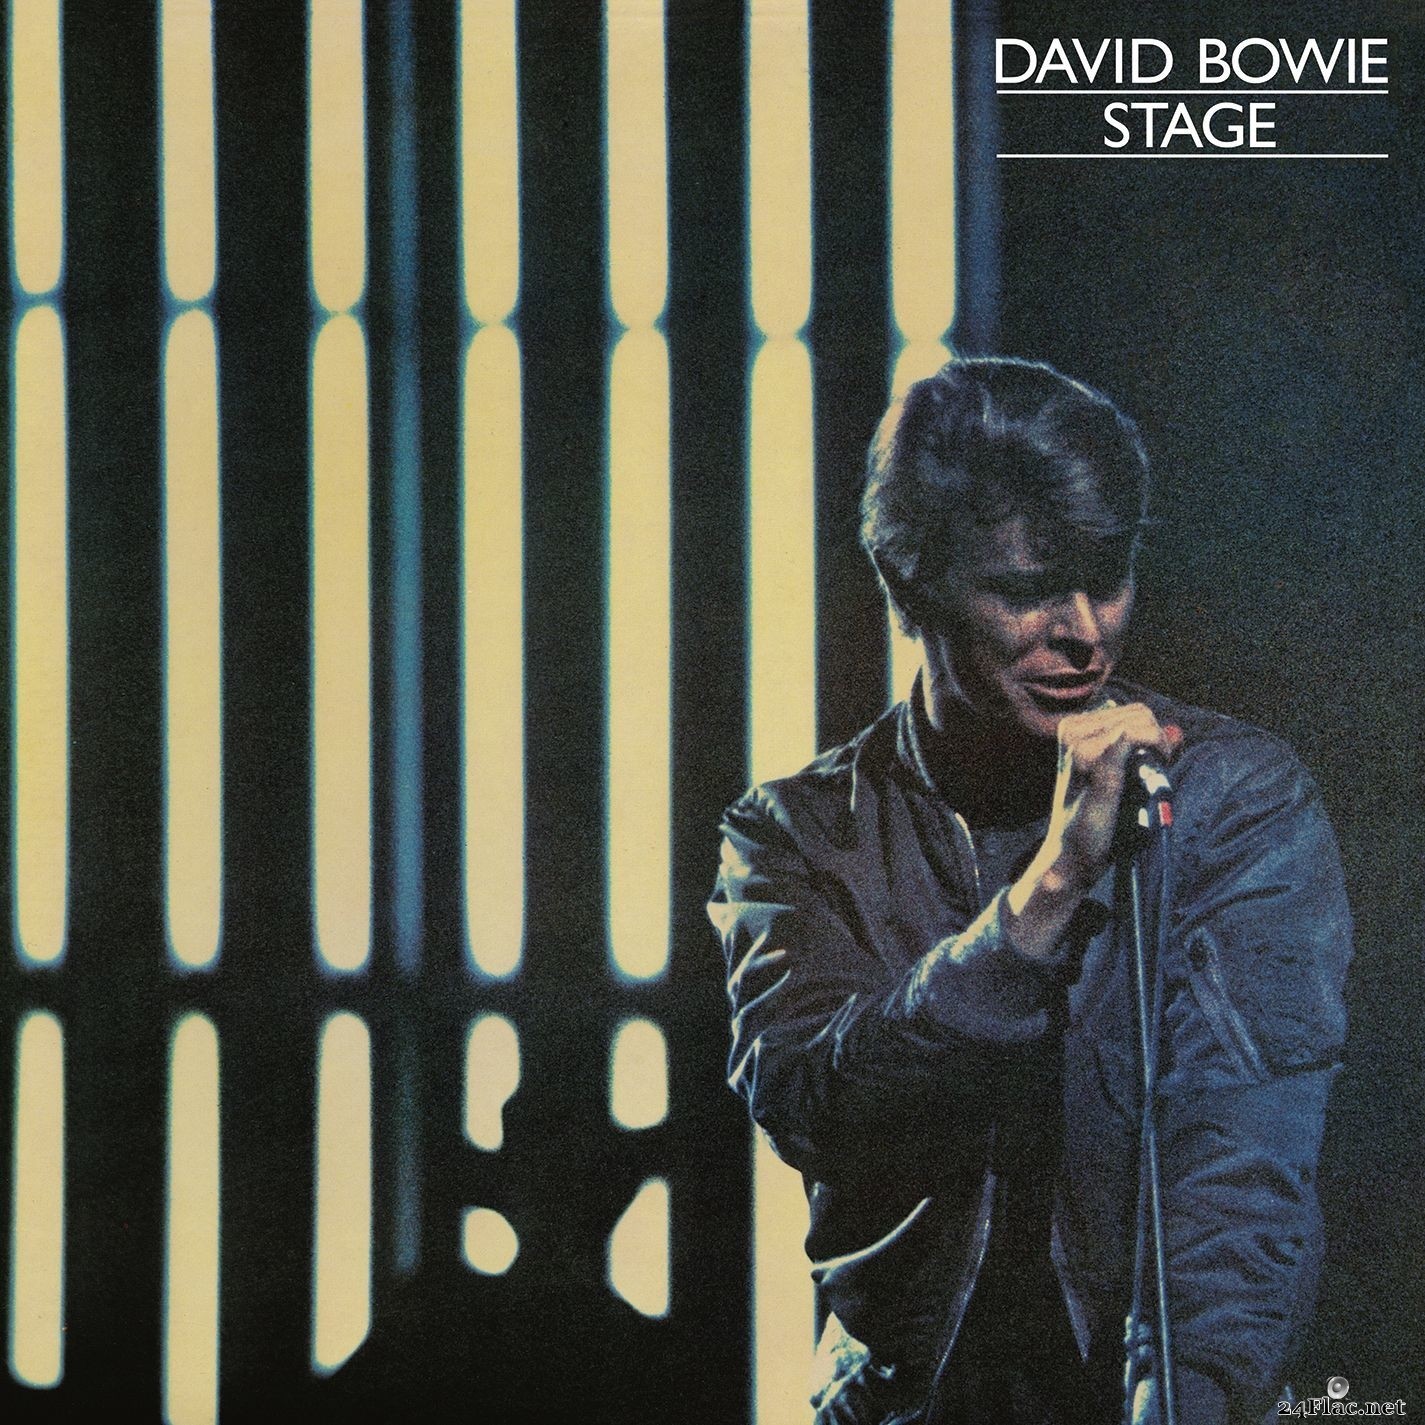 David Bowie - Stage (Live) (2017 Remastered) (2017) Hi-Res